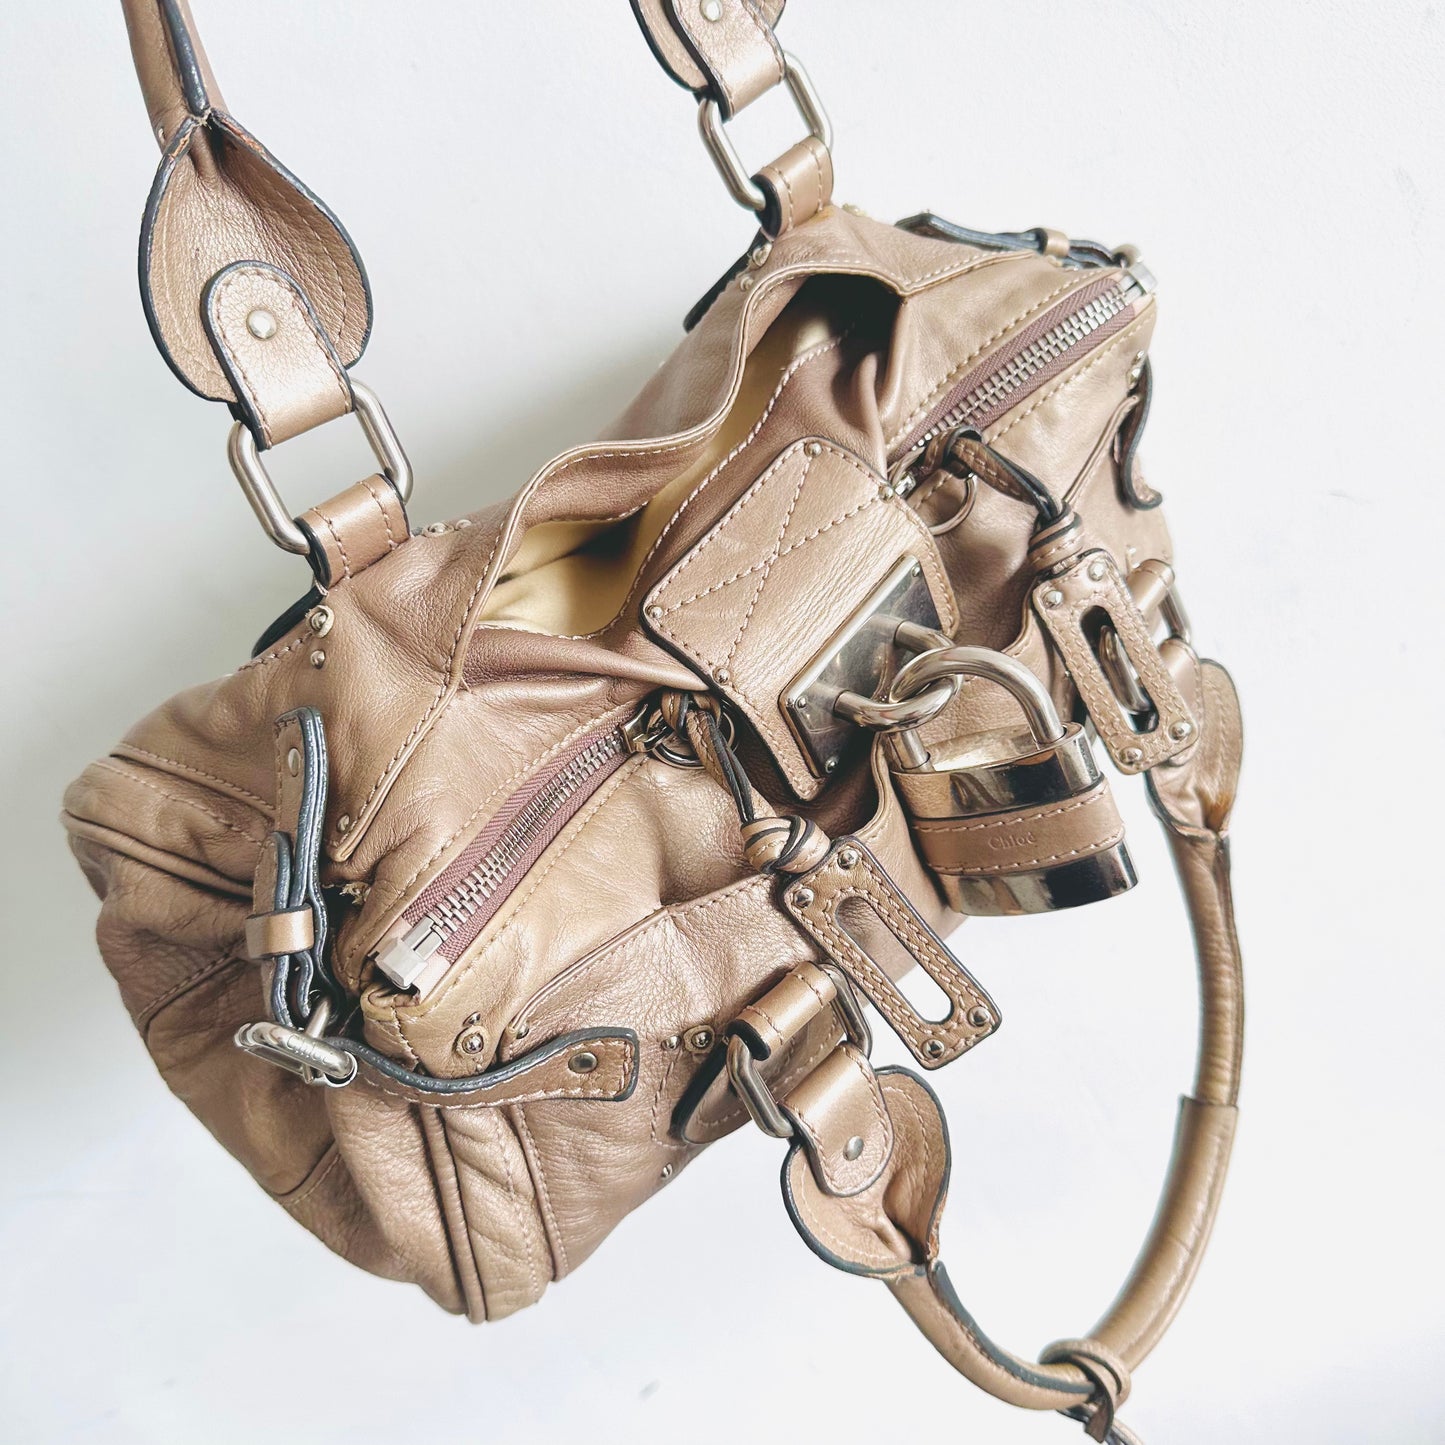 Chloe Paddington Beige Classic Leather Shoulder Tote Bag